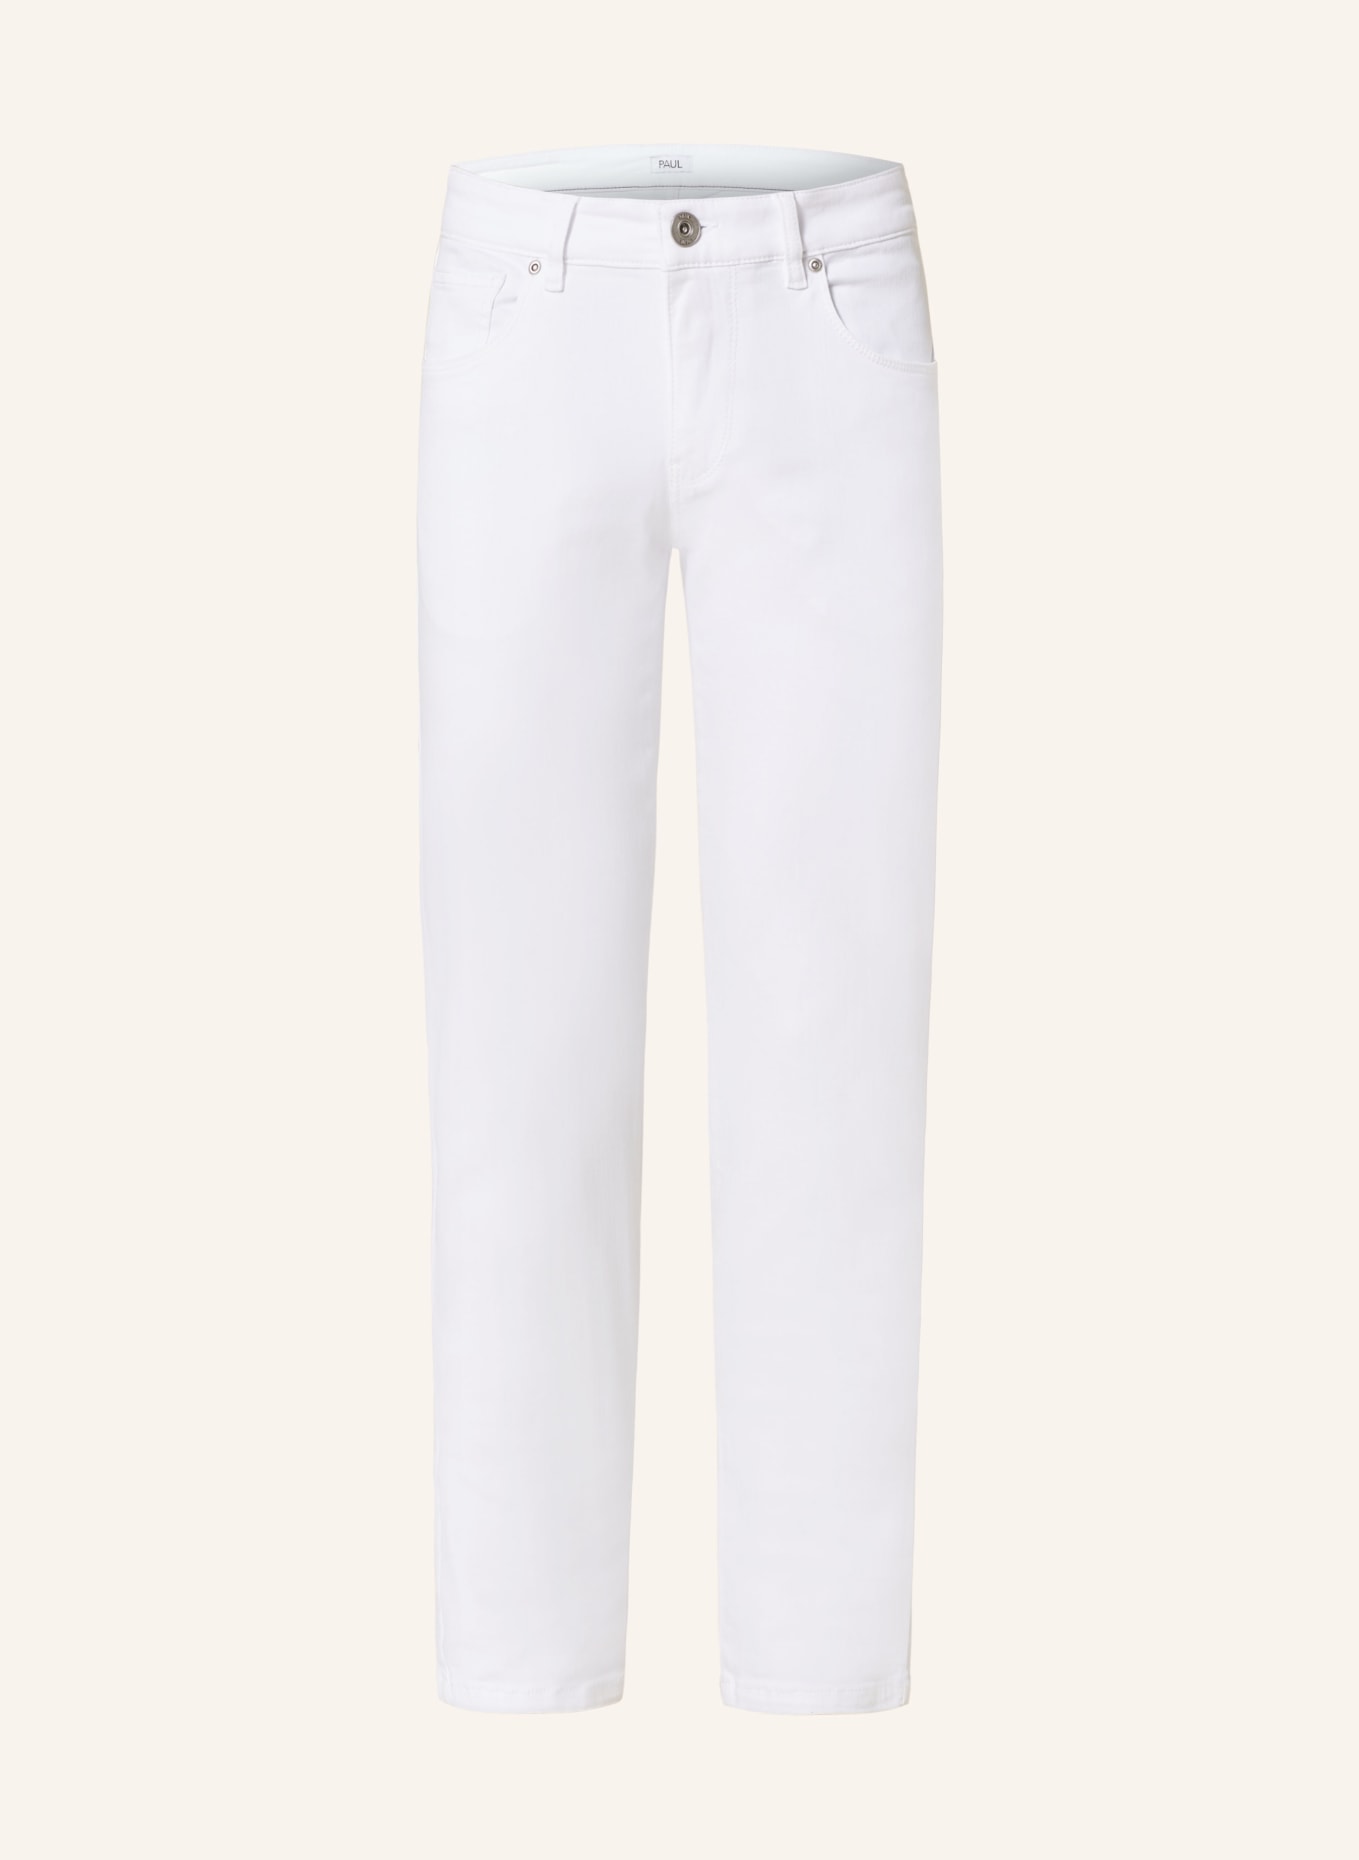 PAUL Jeans Slim Fit, Farbe: 0132 white (Bild 1)